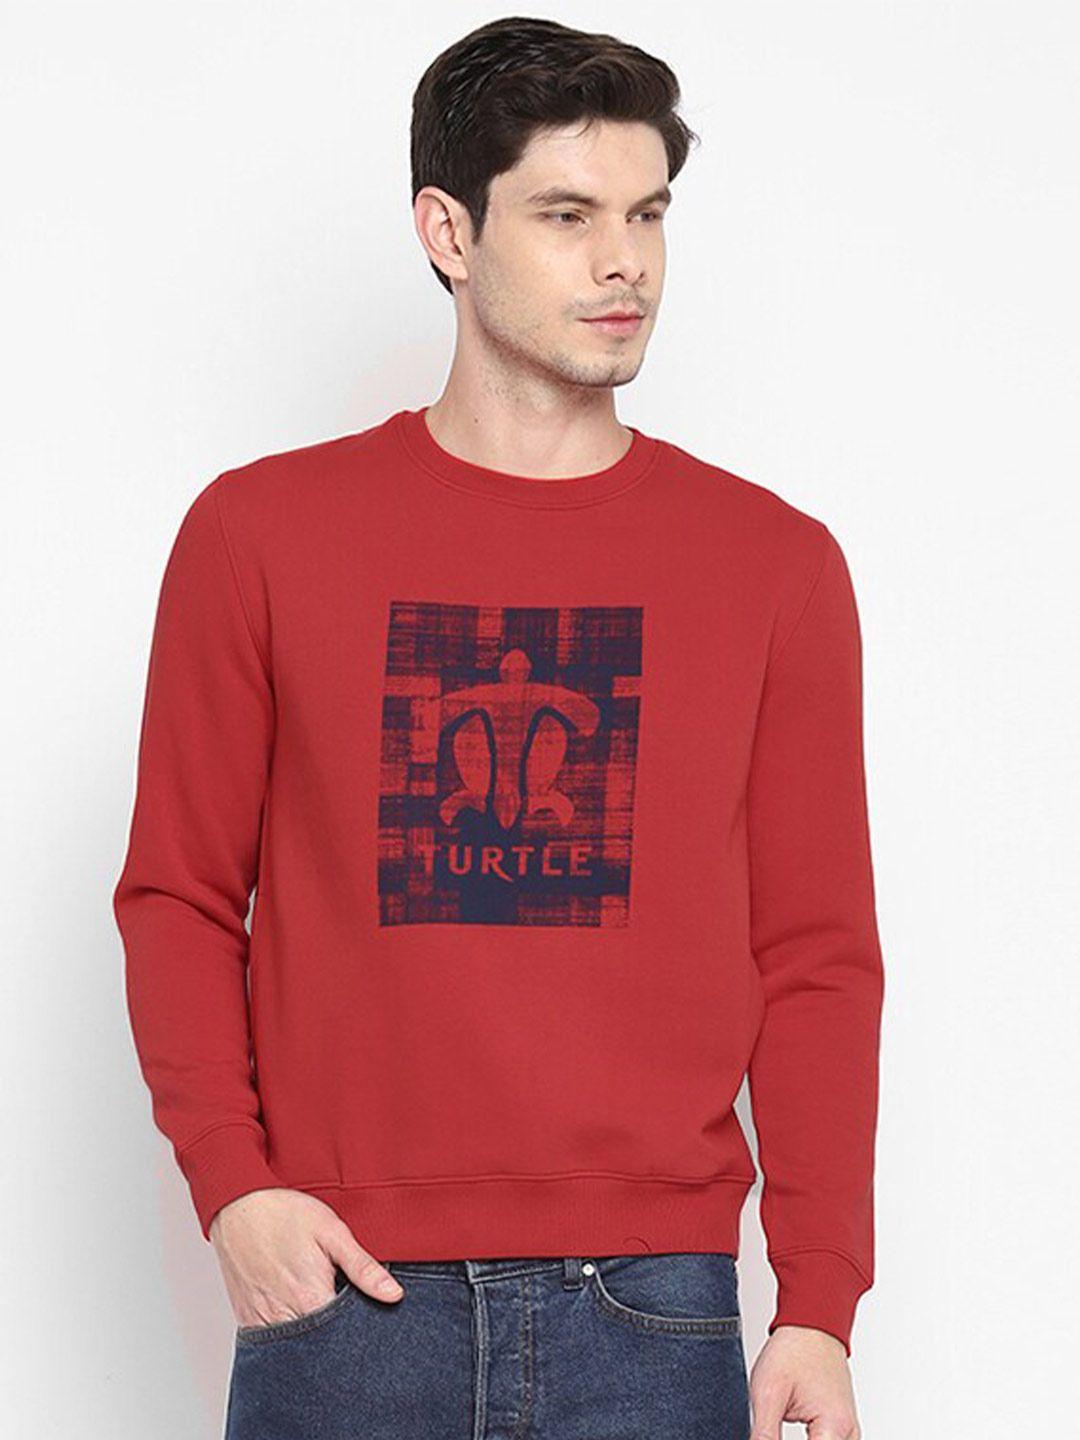 turtle graphic printed long sleeve regular fit cotton pullover sweatshirt